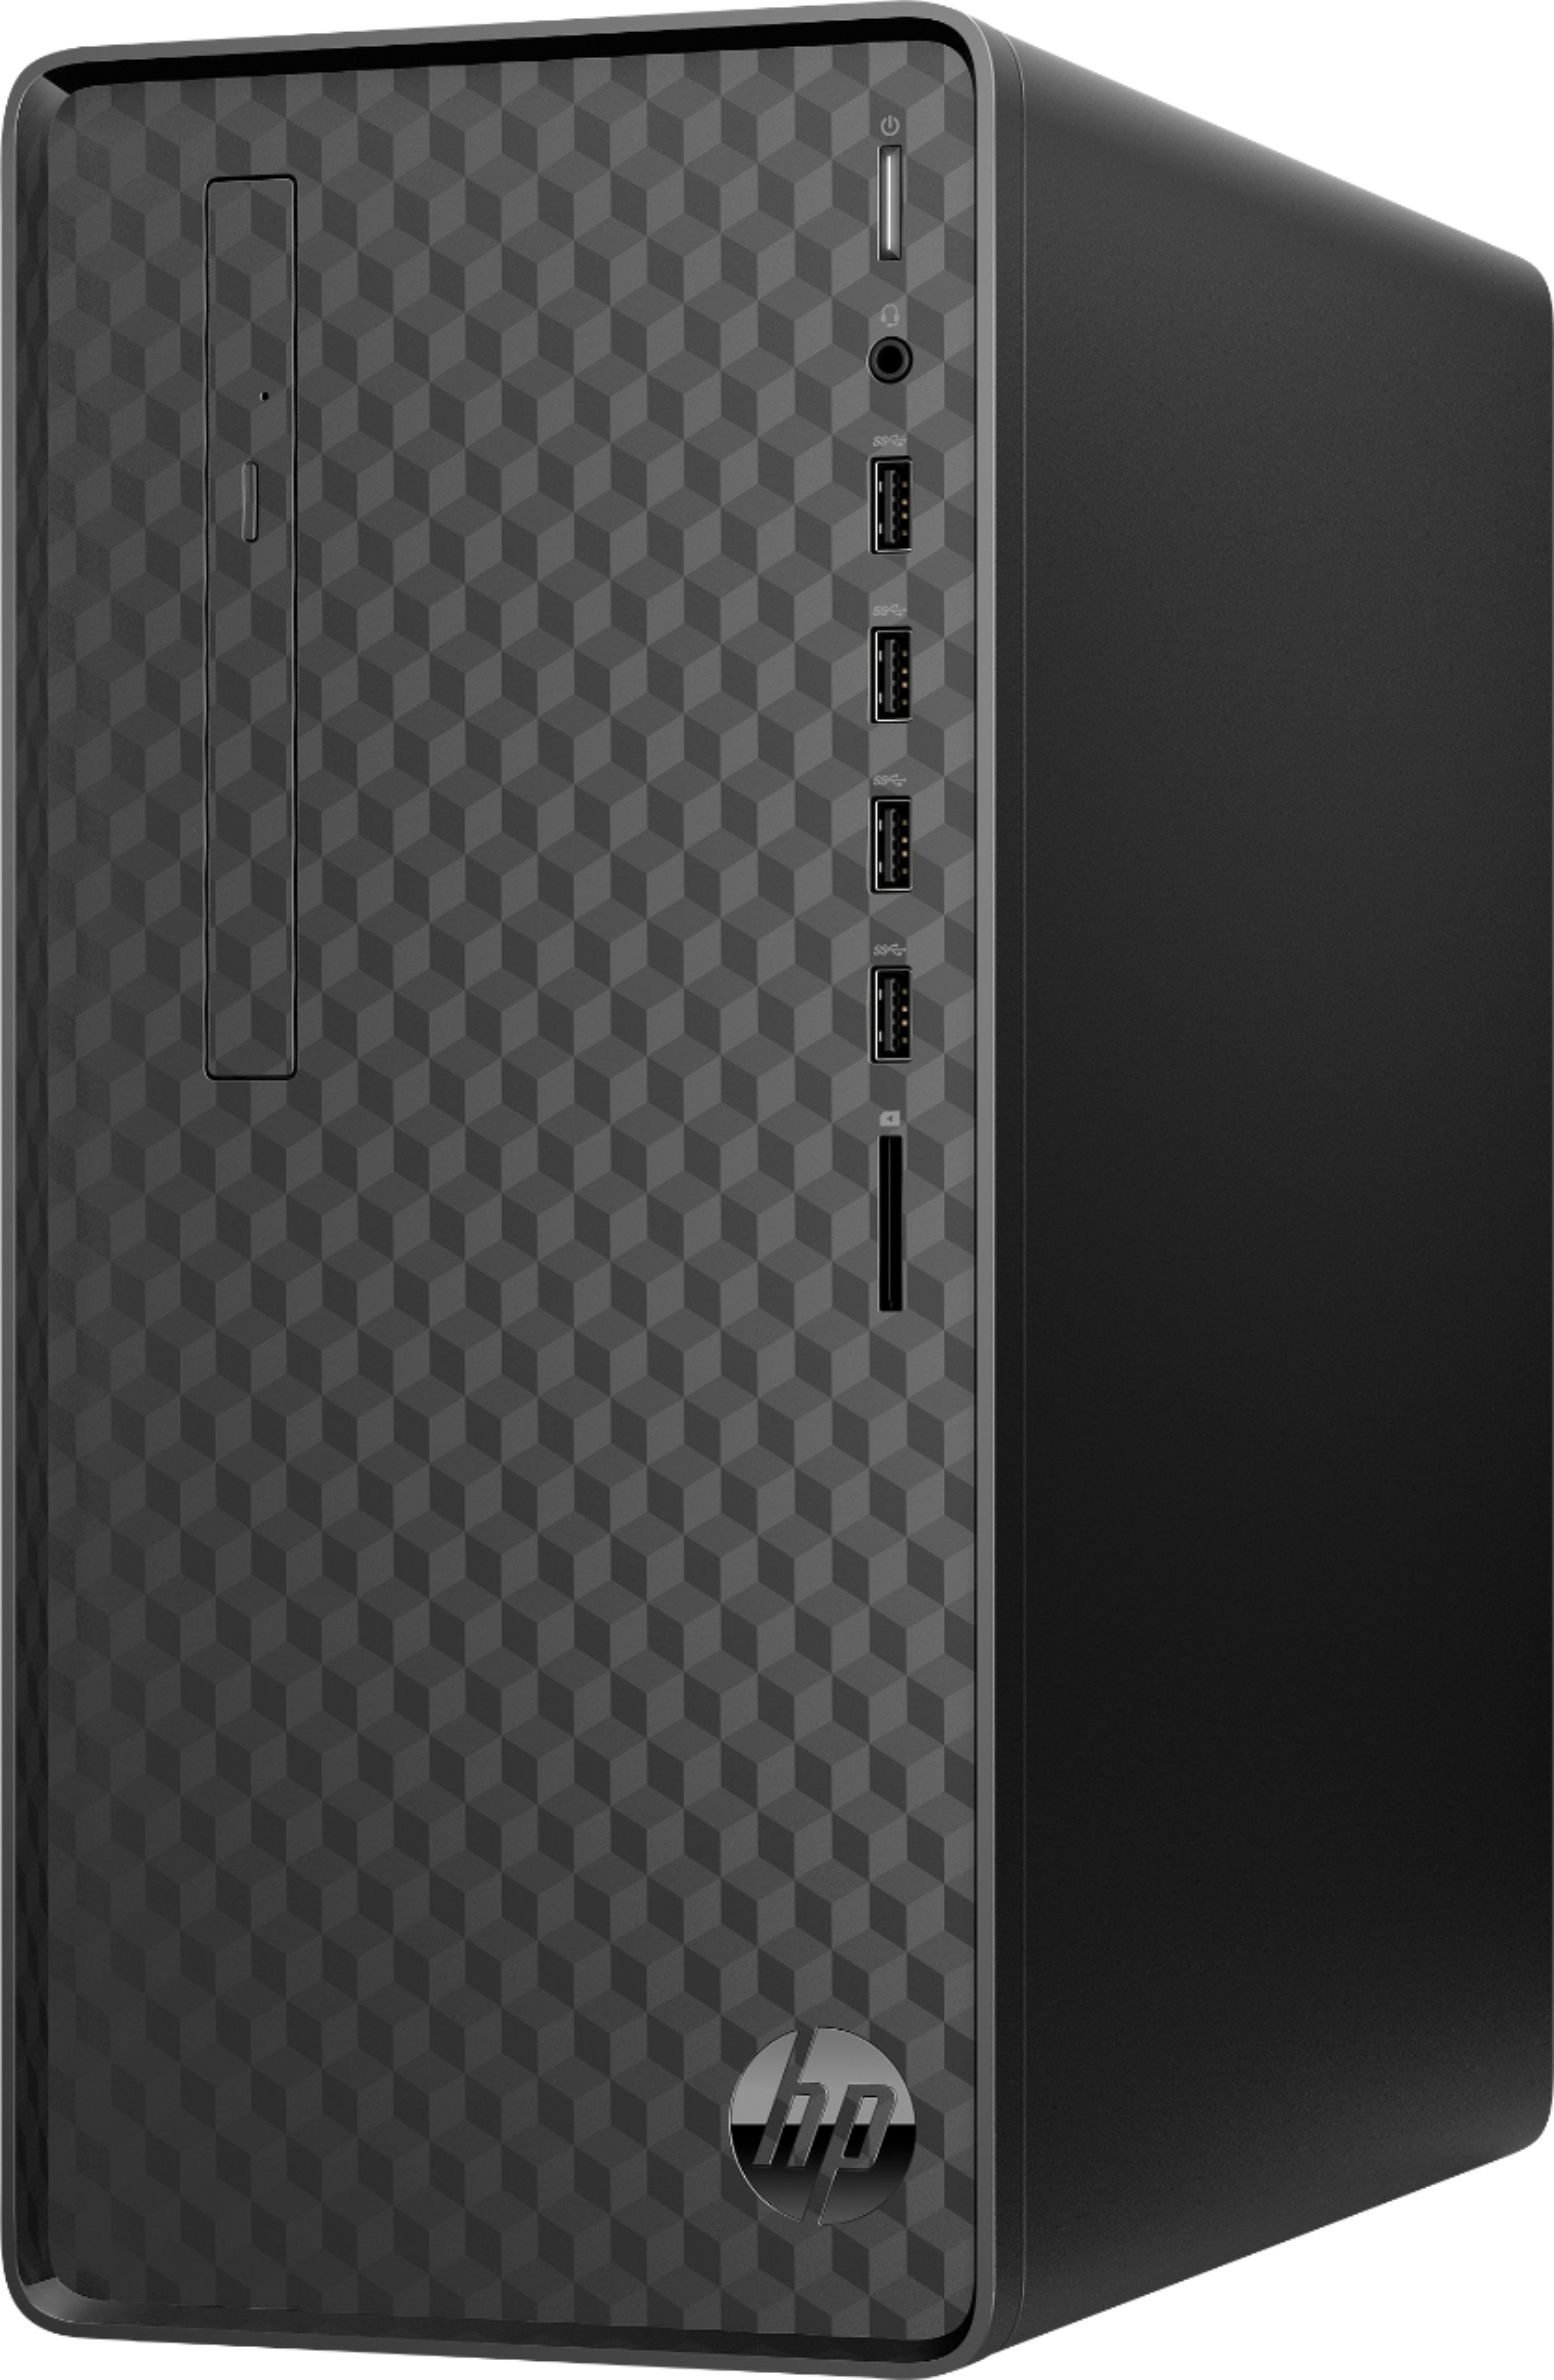 Angle View: HP - t430 Thin Client Desktop - Intel Celeron N4000 - 4 GB Memory - 32 GB Flash Storage